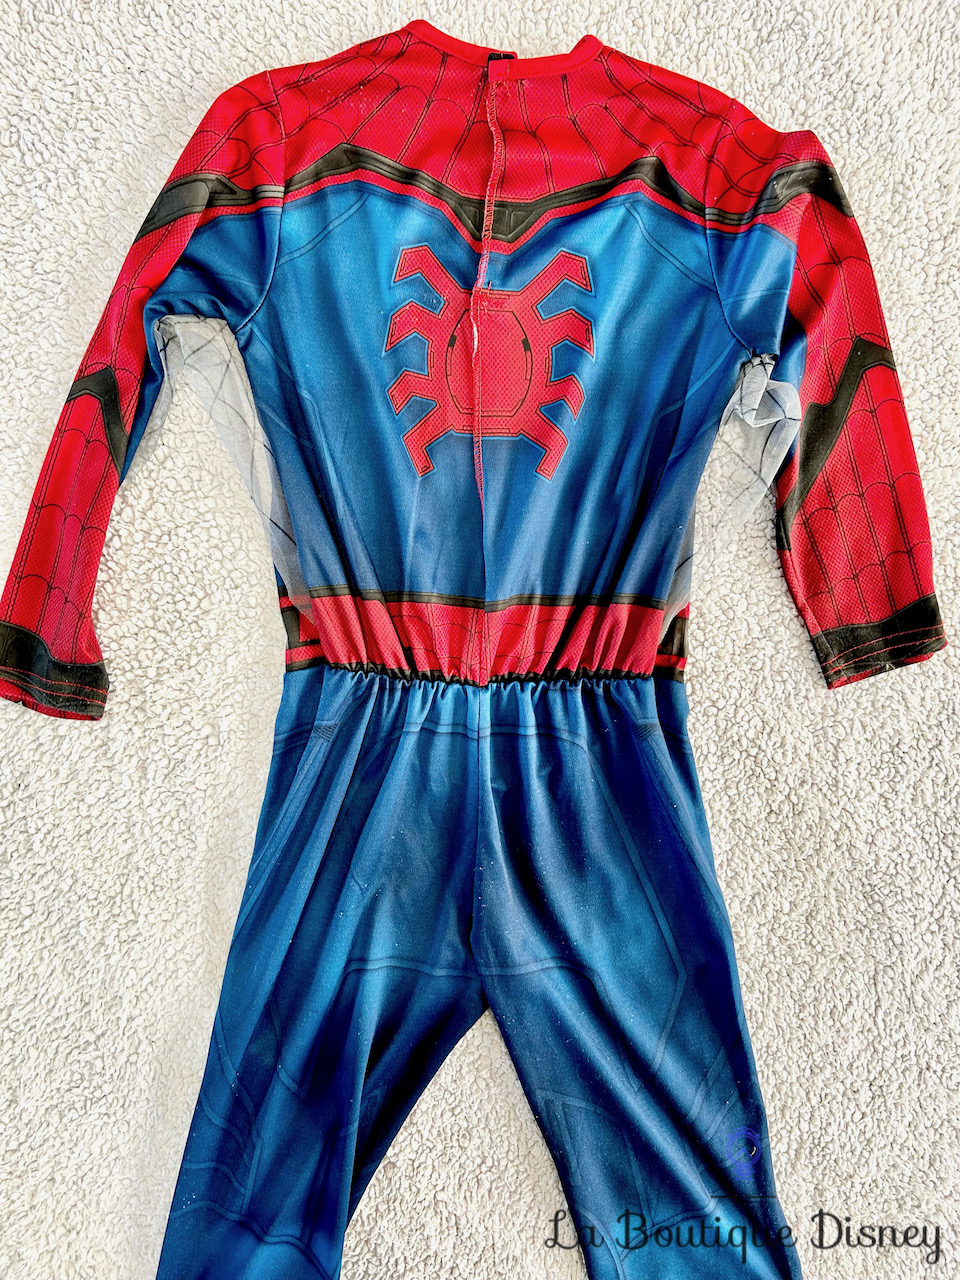 déguisement-spider-man-disney-marvel-homecoming-rubies-combinaison-bleu-rouge-masque-5